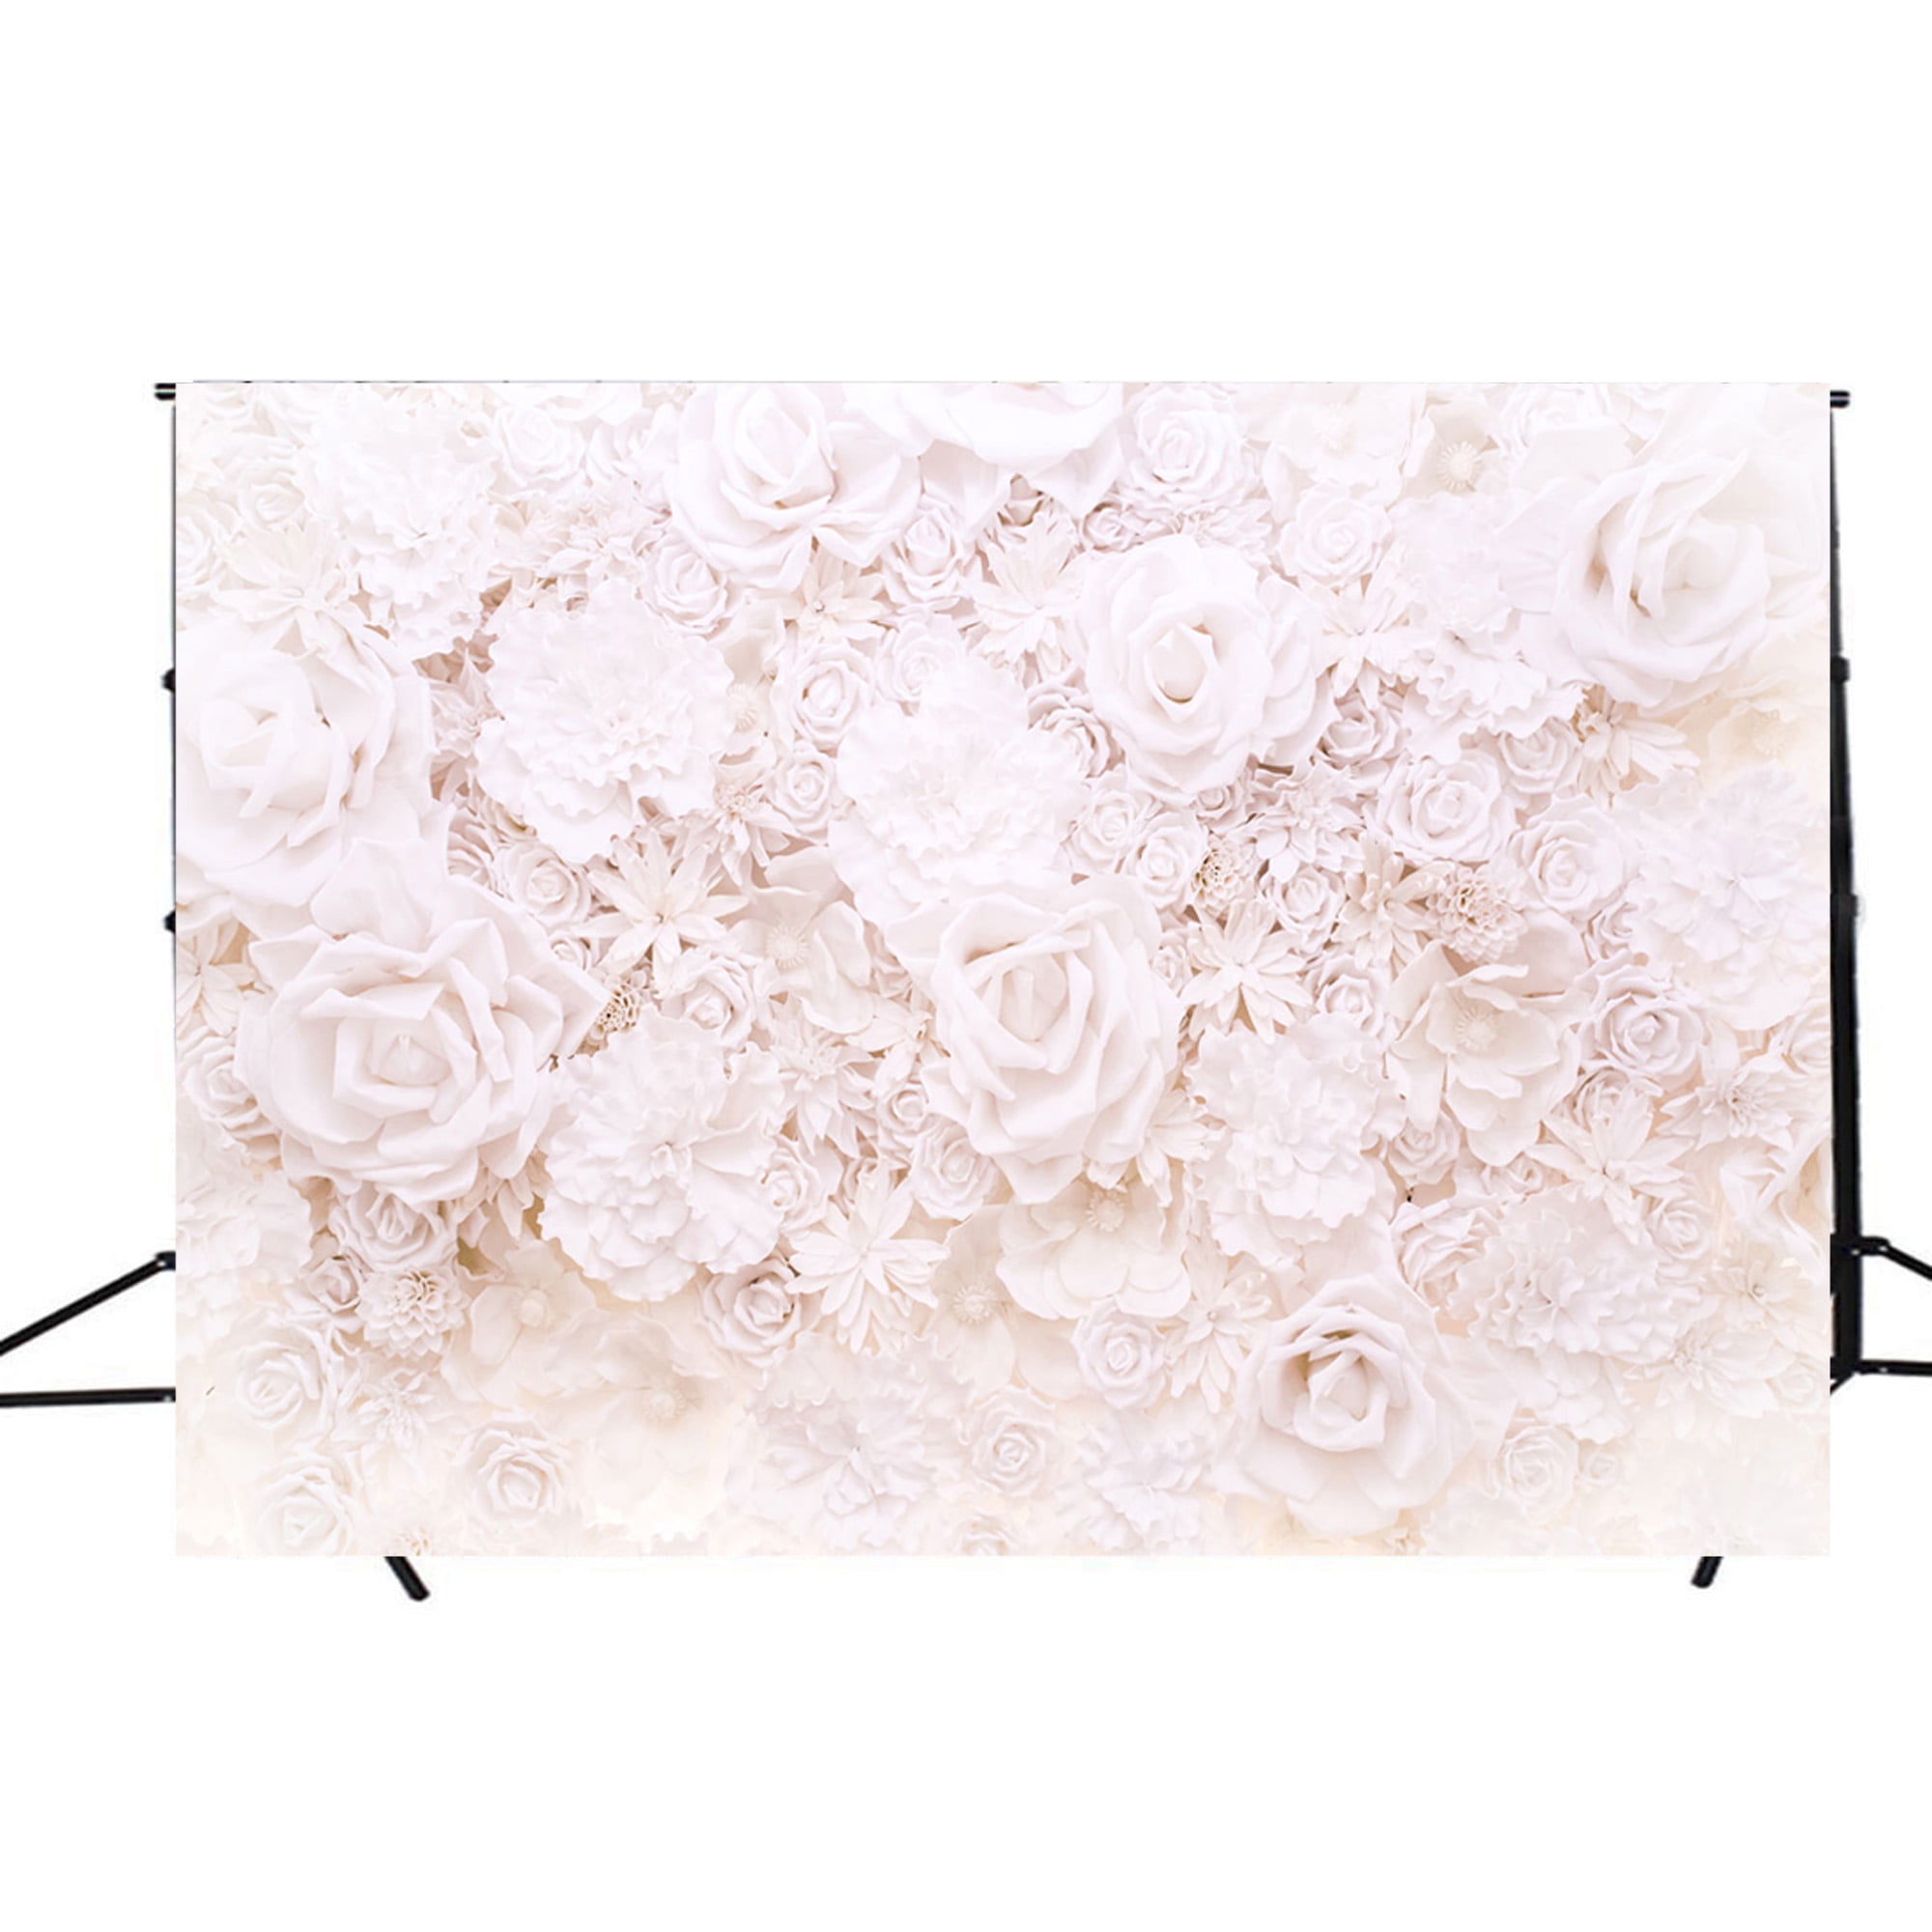 1-50x 6Color Glitter Foam Rose Flower Bride Hand Bouquet Wedding Party DIY Decor 